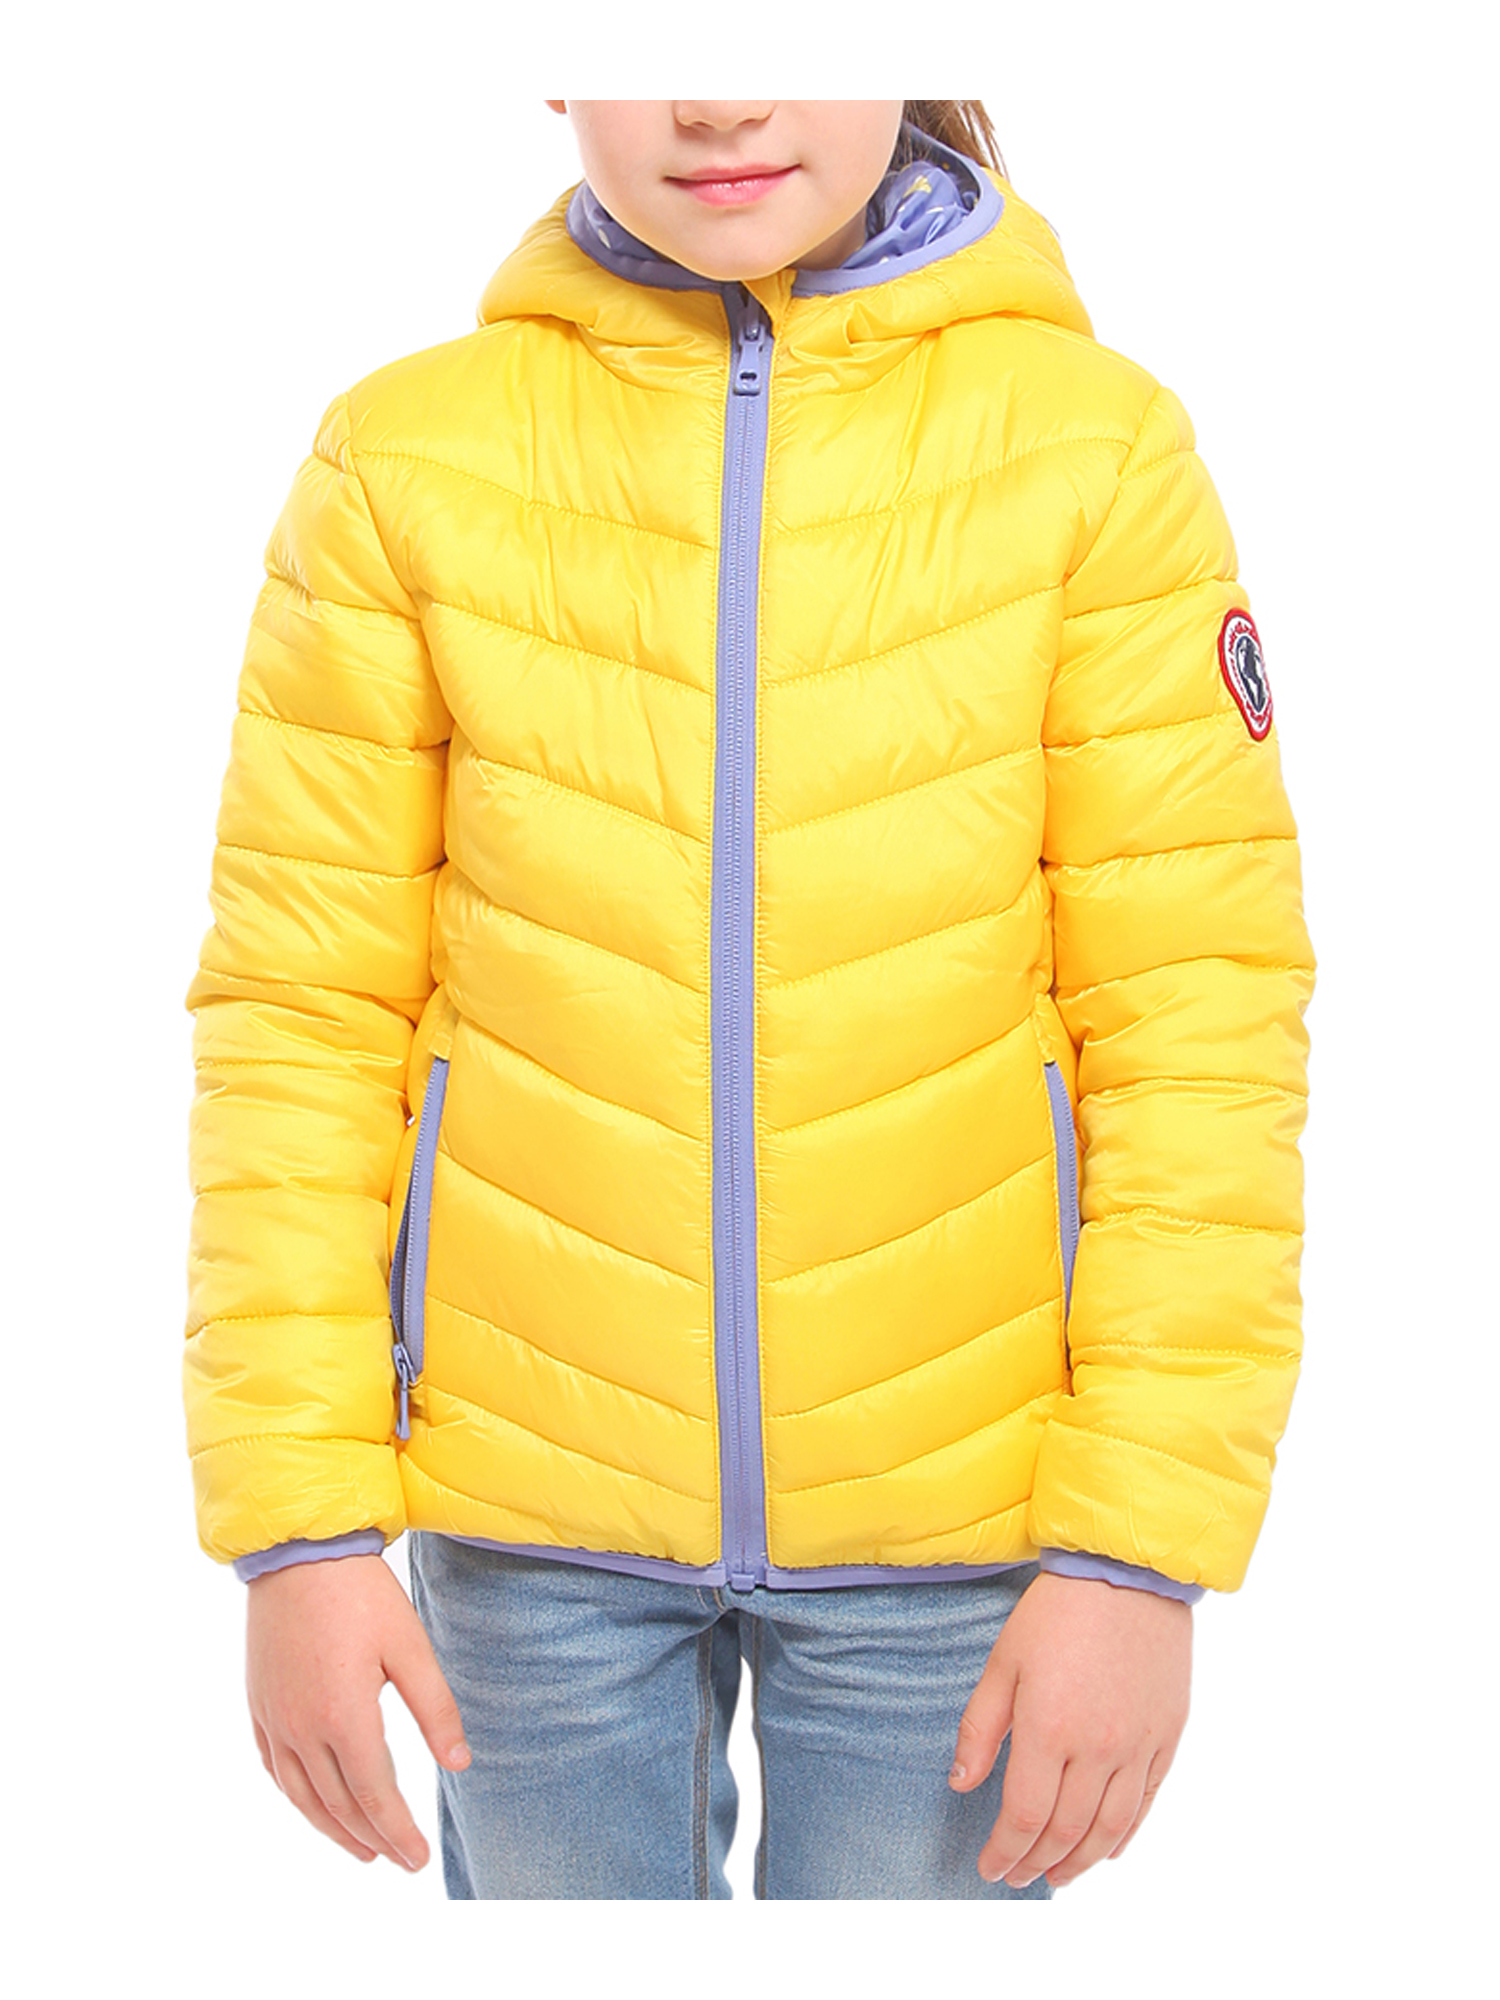 Rokka&Rolla Girls' Reversible Light Puffer Jacket Coat, Sizes 4-18 - image 4 of 9